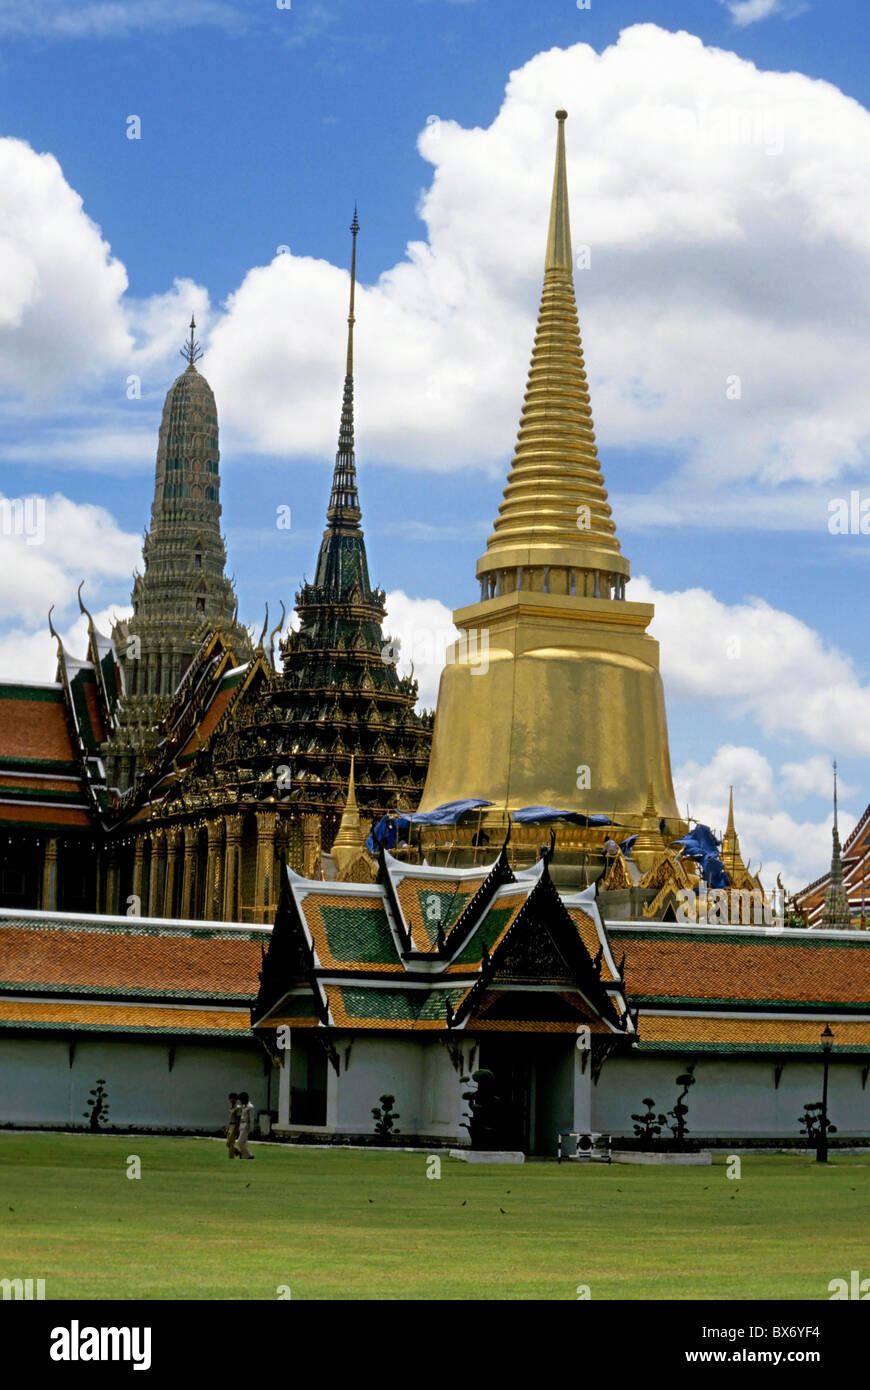 Temple of the Emerald Buddha or Wat Phra Kaew, Bangkok, Thailand. Stock Photo